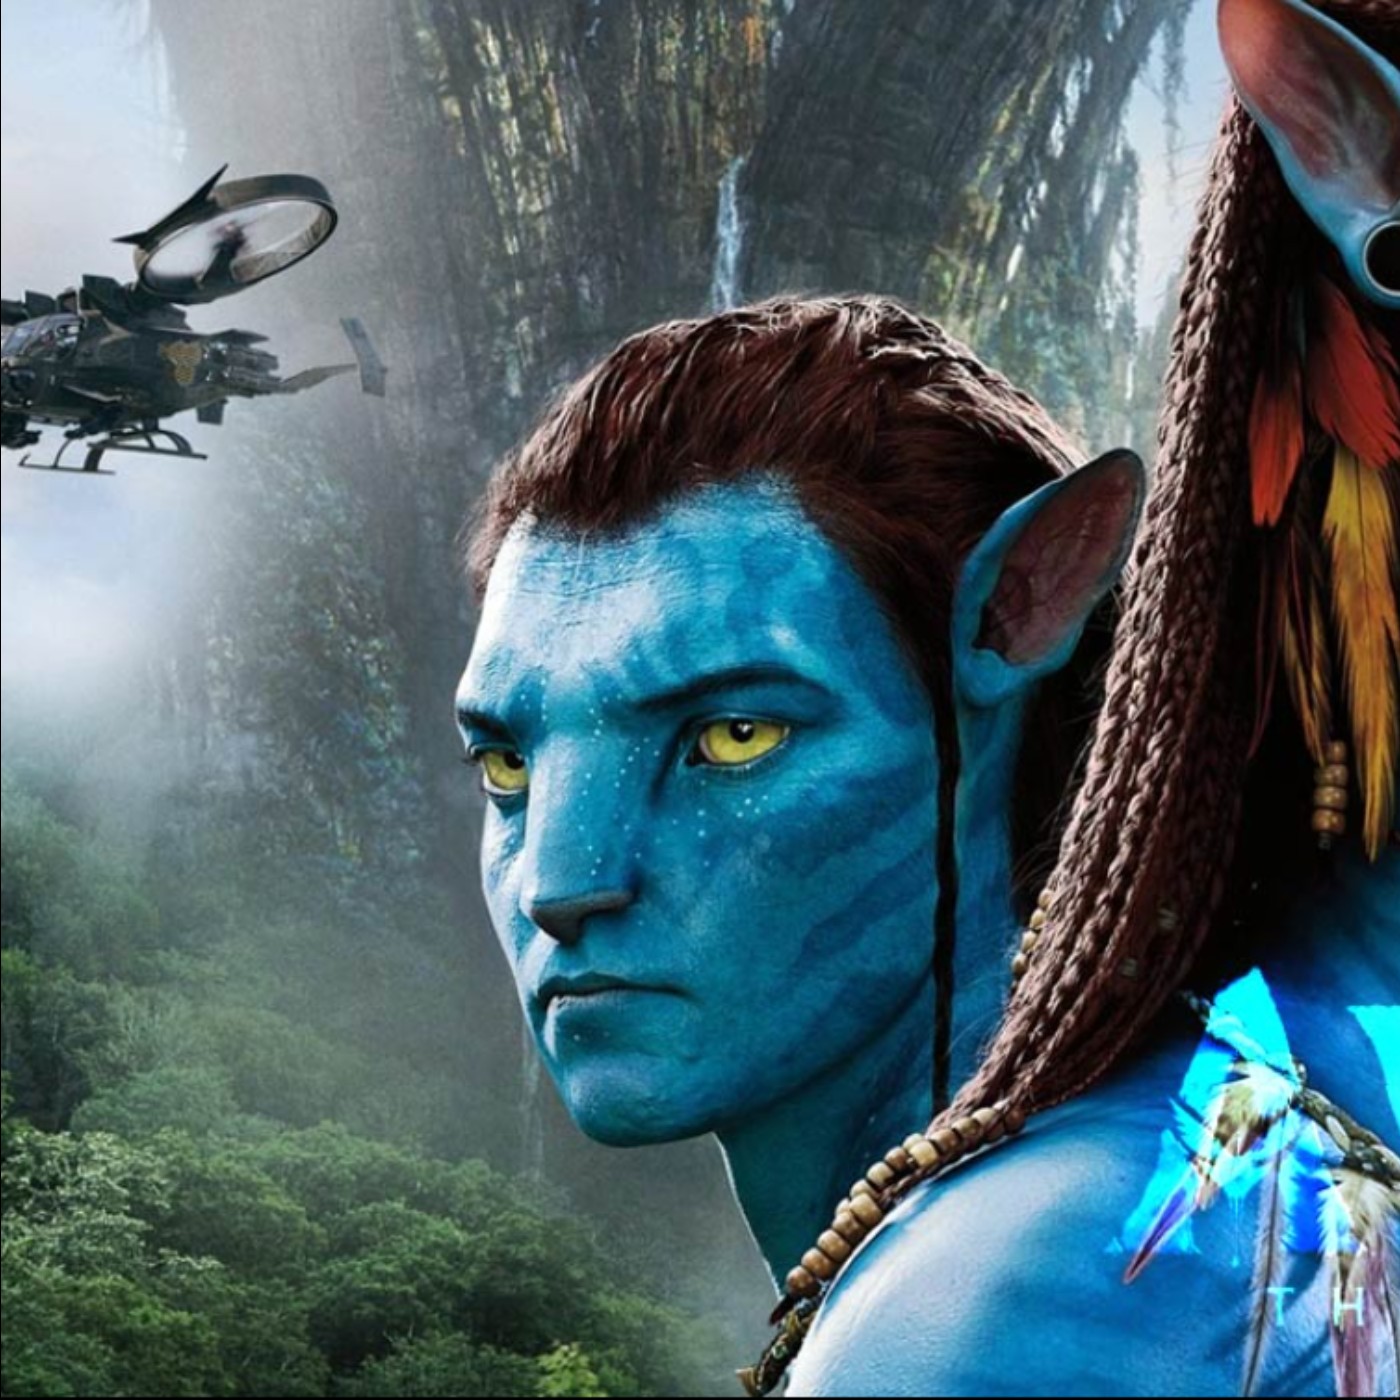 Avatar The Way of Water nhận về cơn mưa lời khen sau khi ra mắt